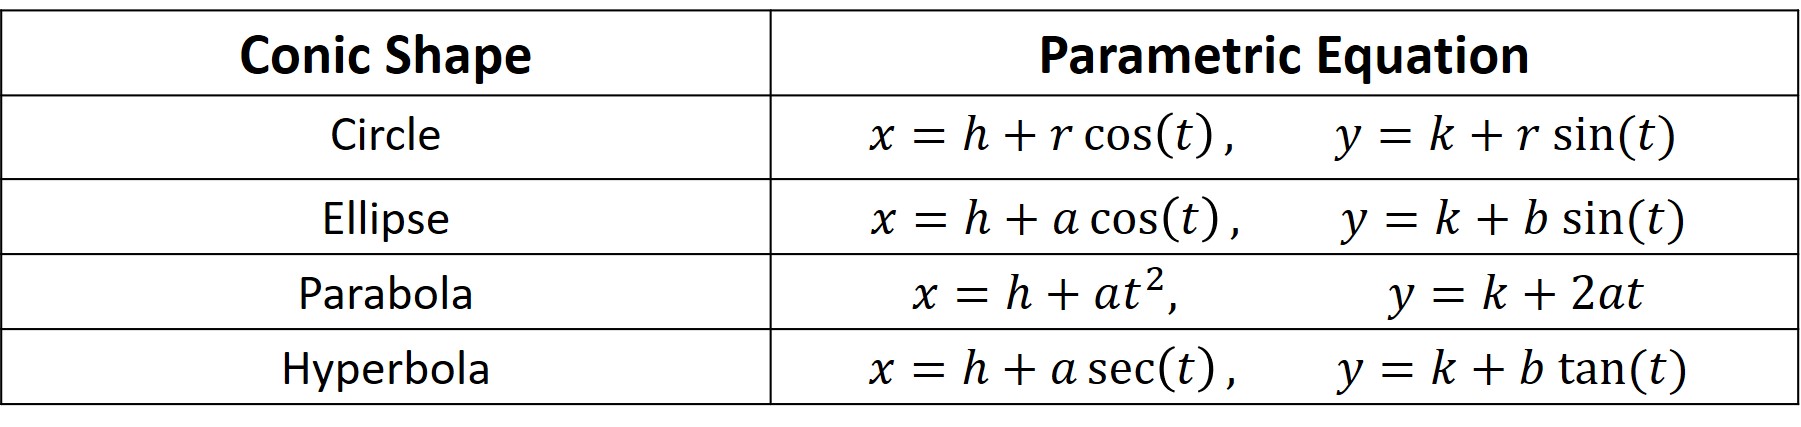 Parametric equations of conic shape